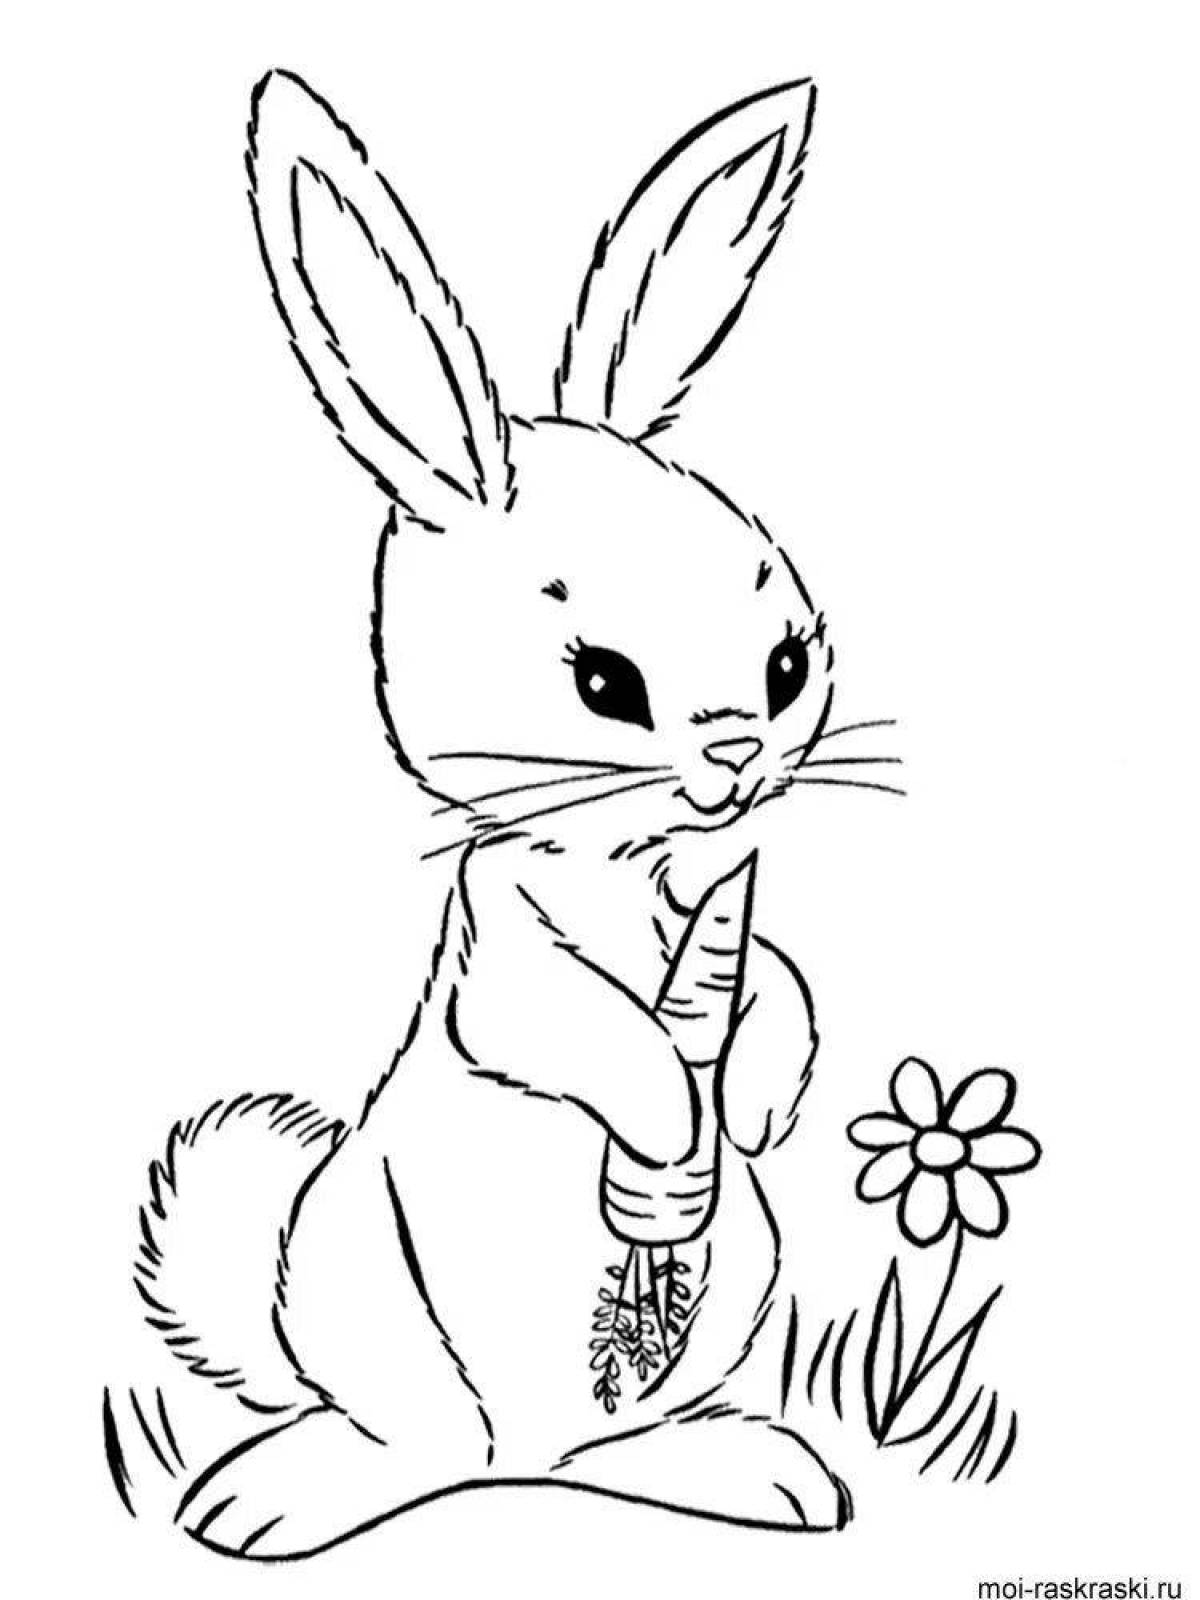 Cozy coloring rabbit image